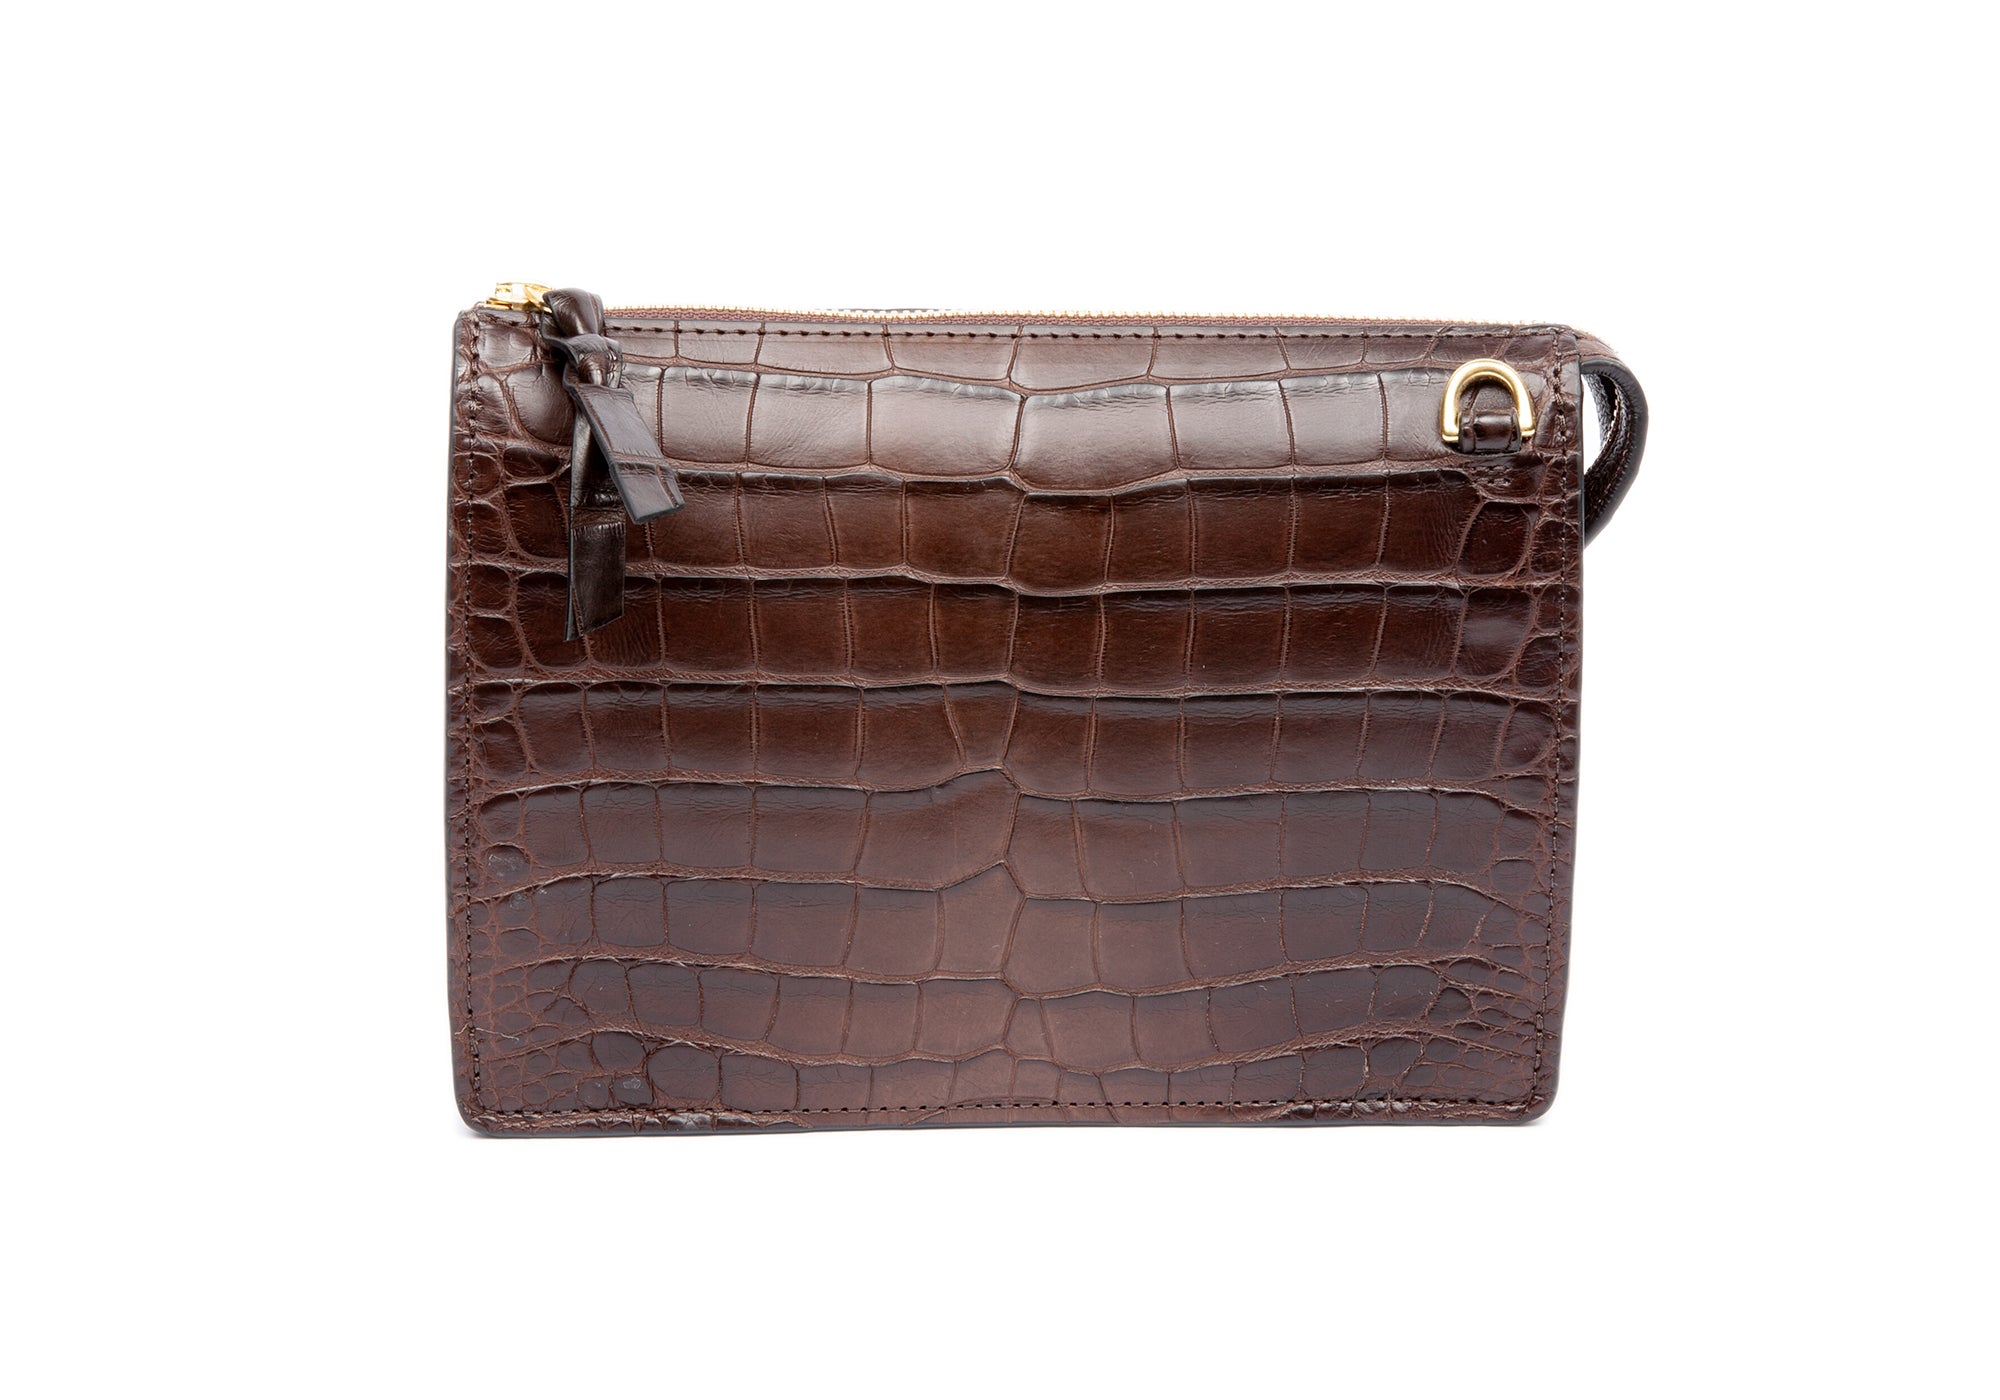 Mercedes Crocodile Leather Handbag With Free Wallet - CIAO SOOS